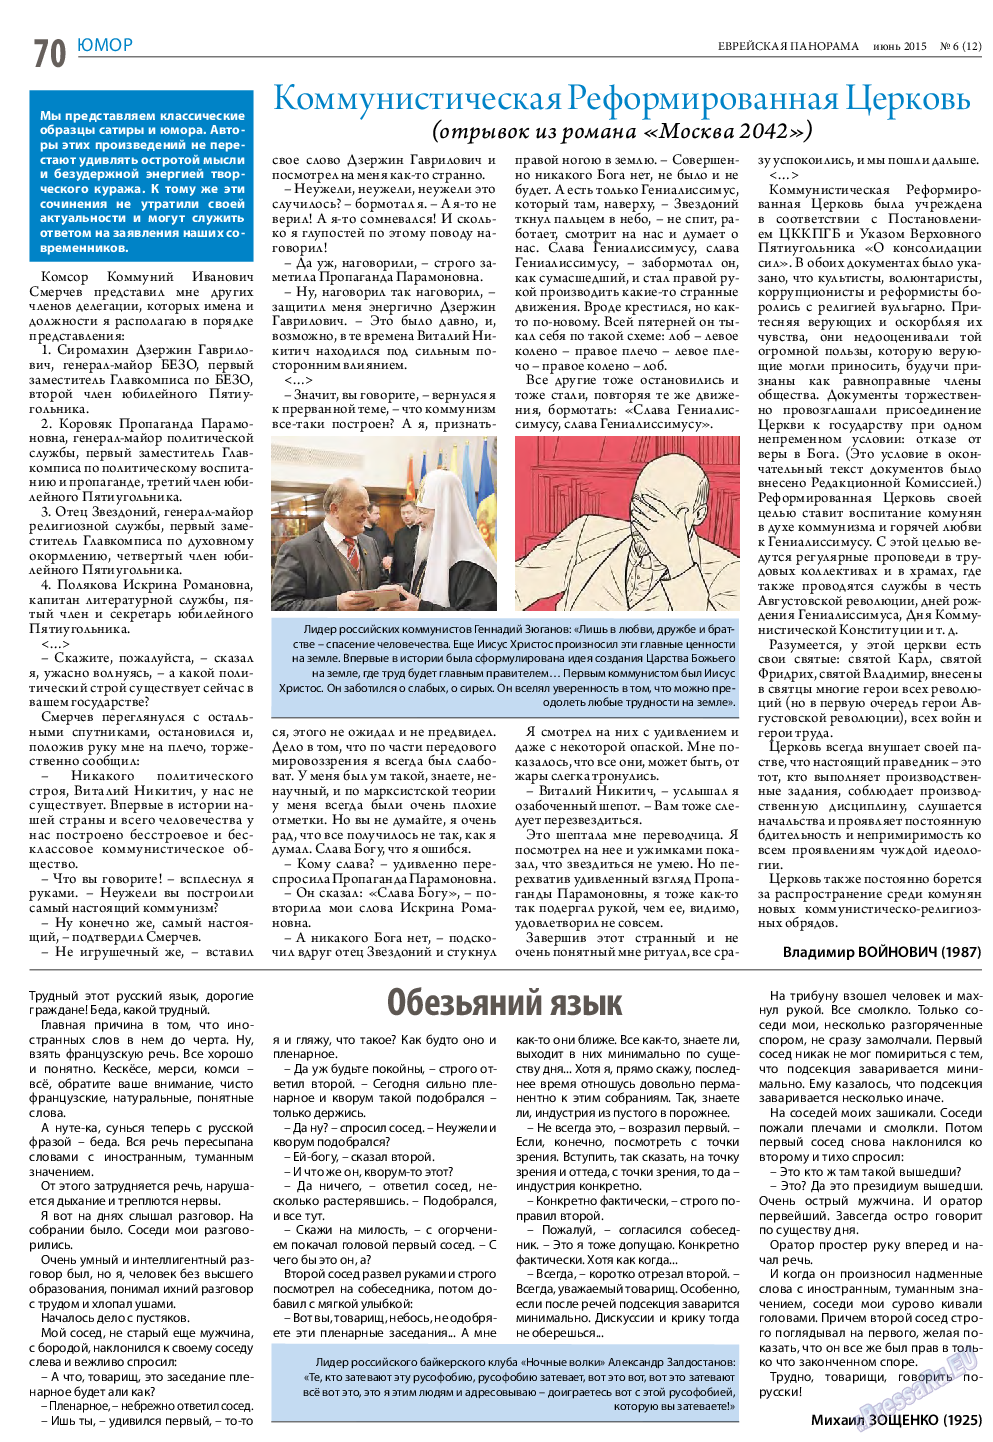 Еврейская панорама, газета. 2015 №6 стр.70